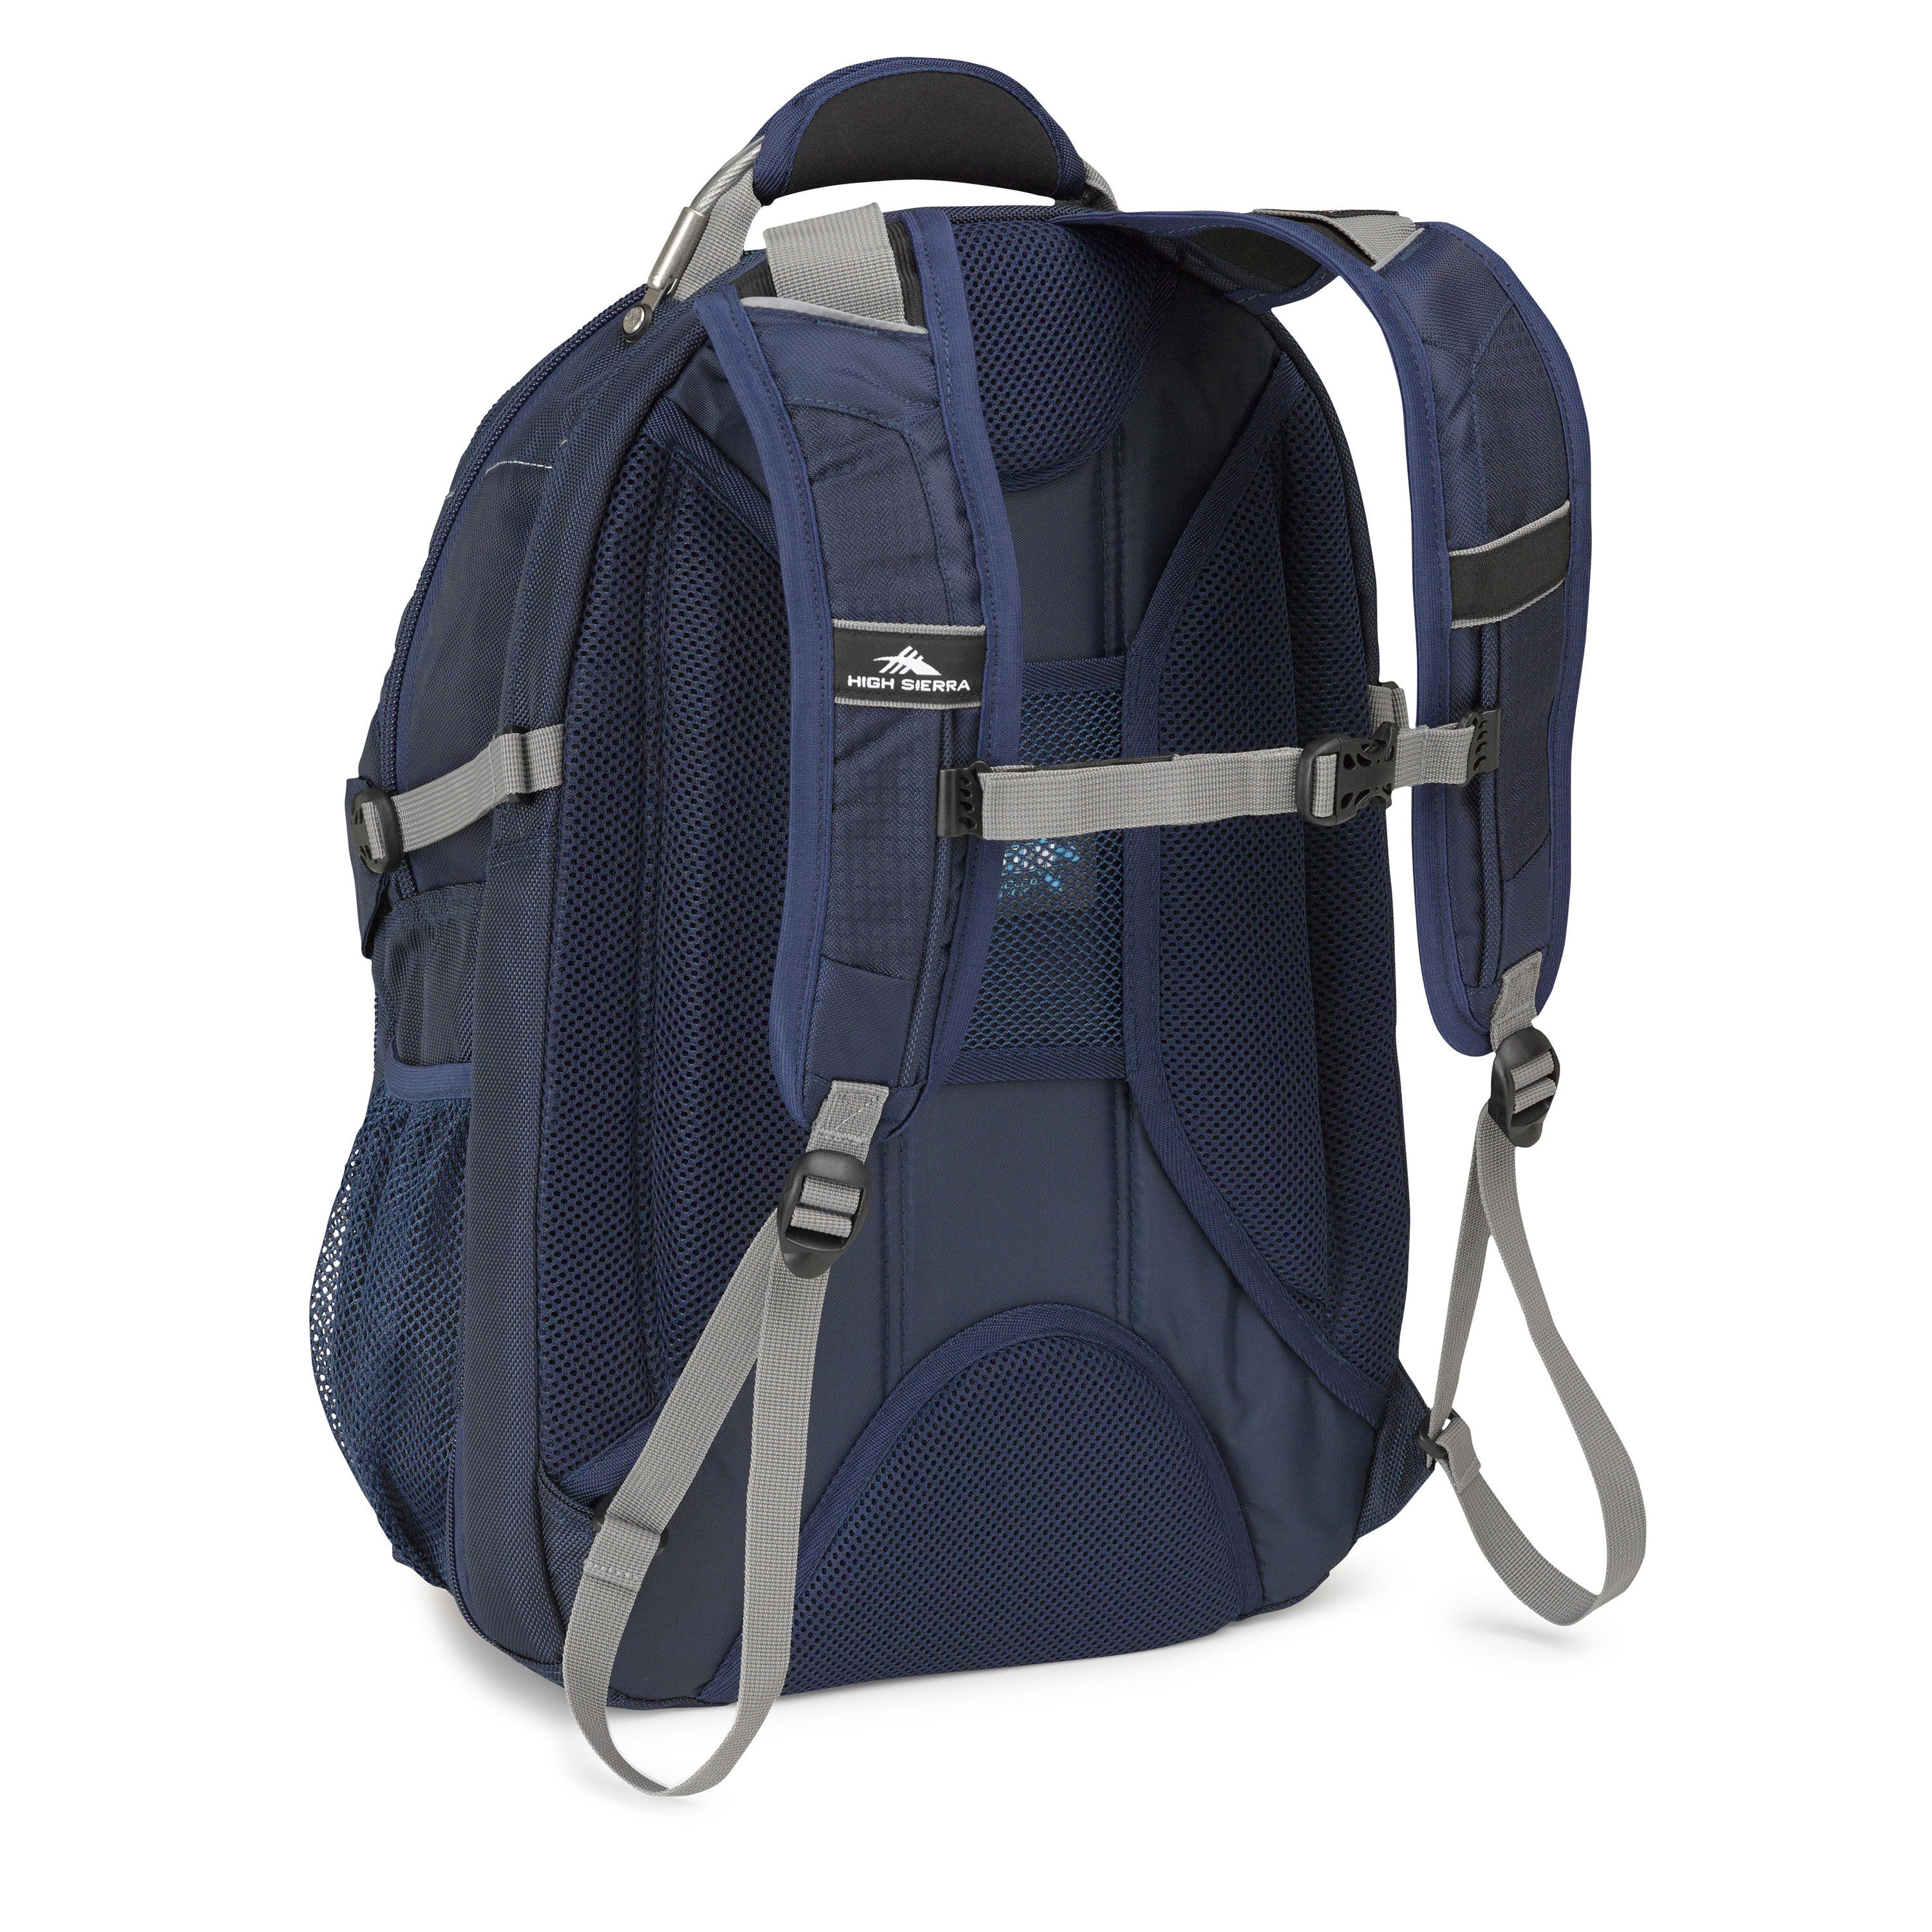 Buy XBT TSA Backpack for USD 59.99 | High Sierra